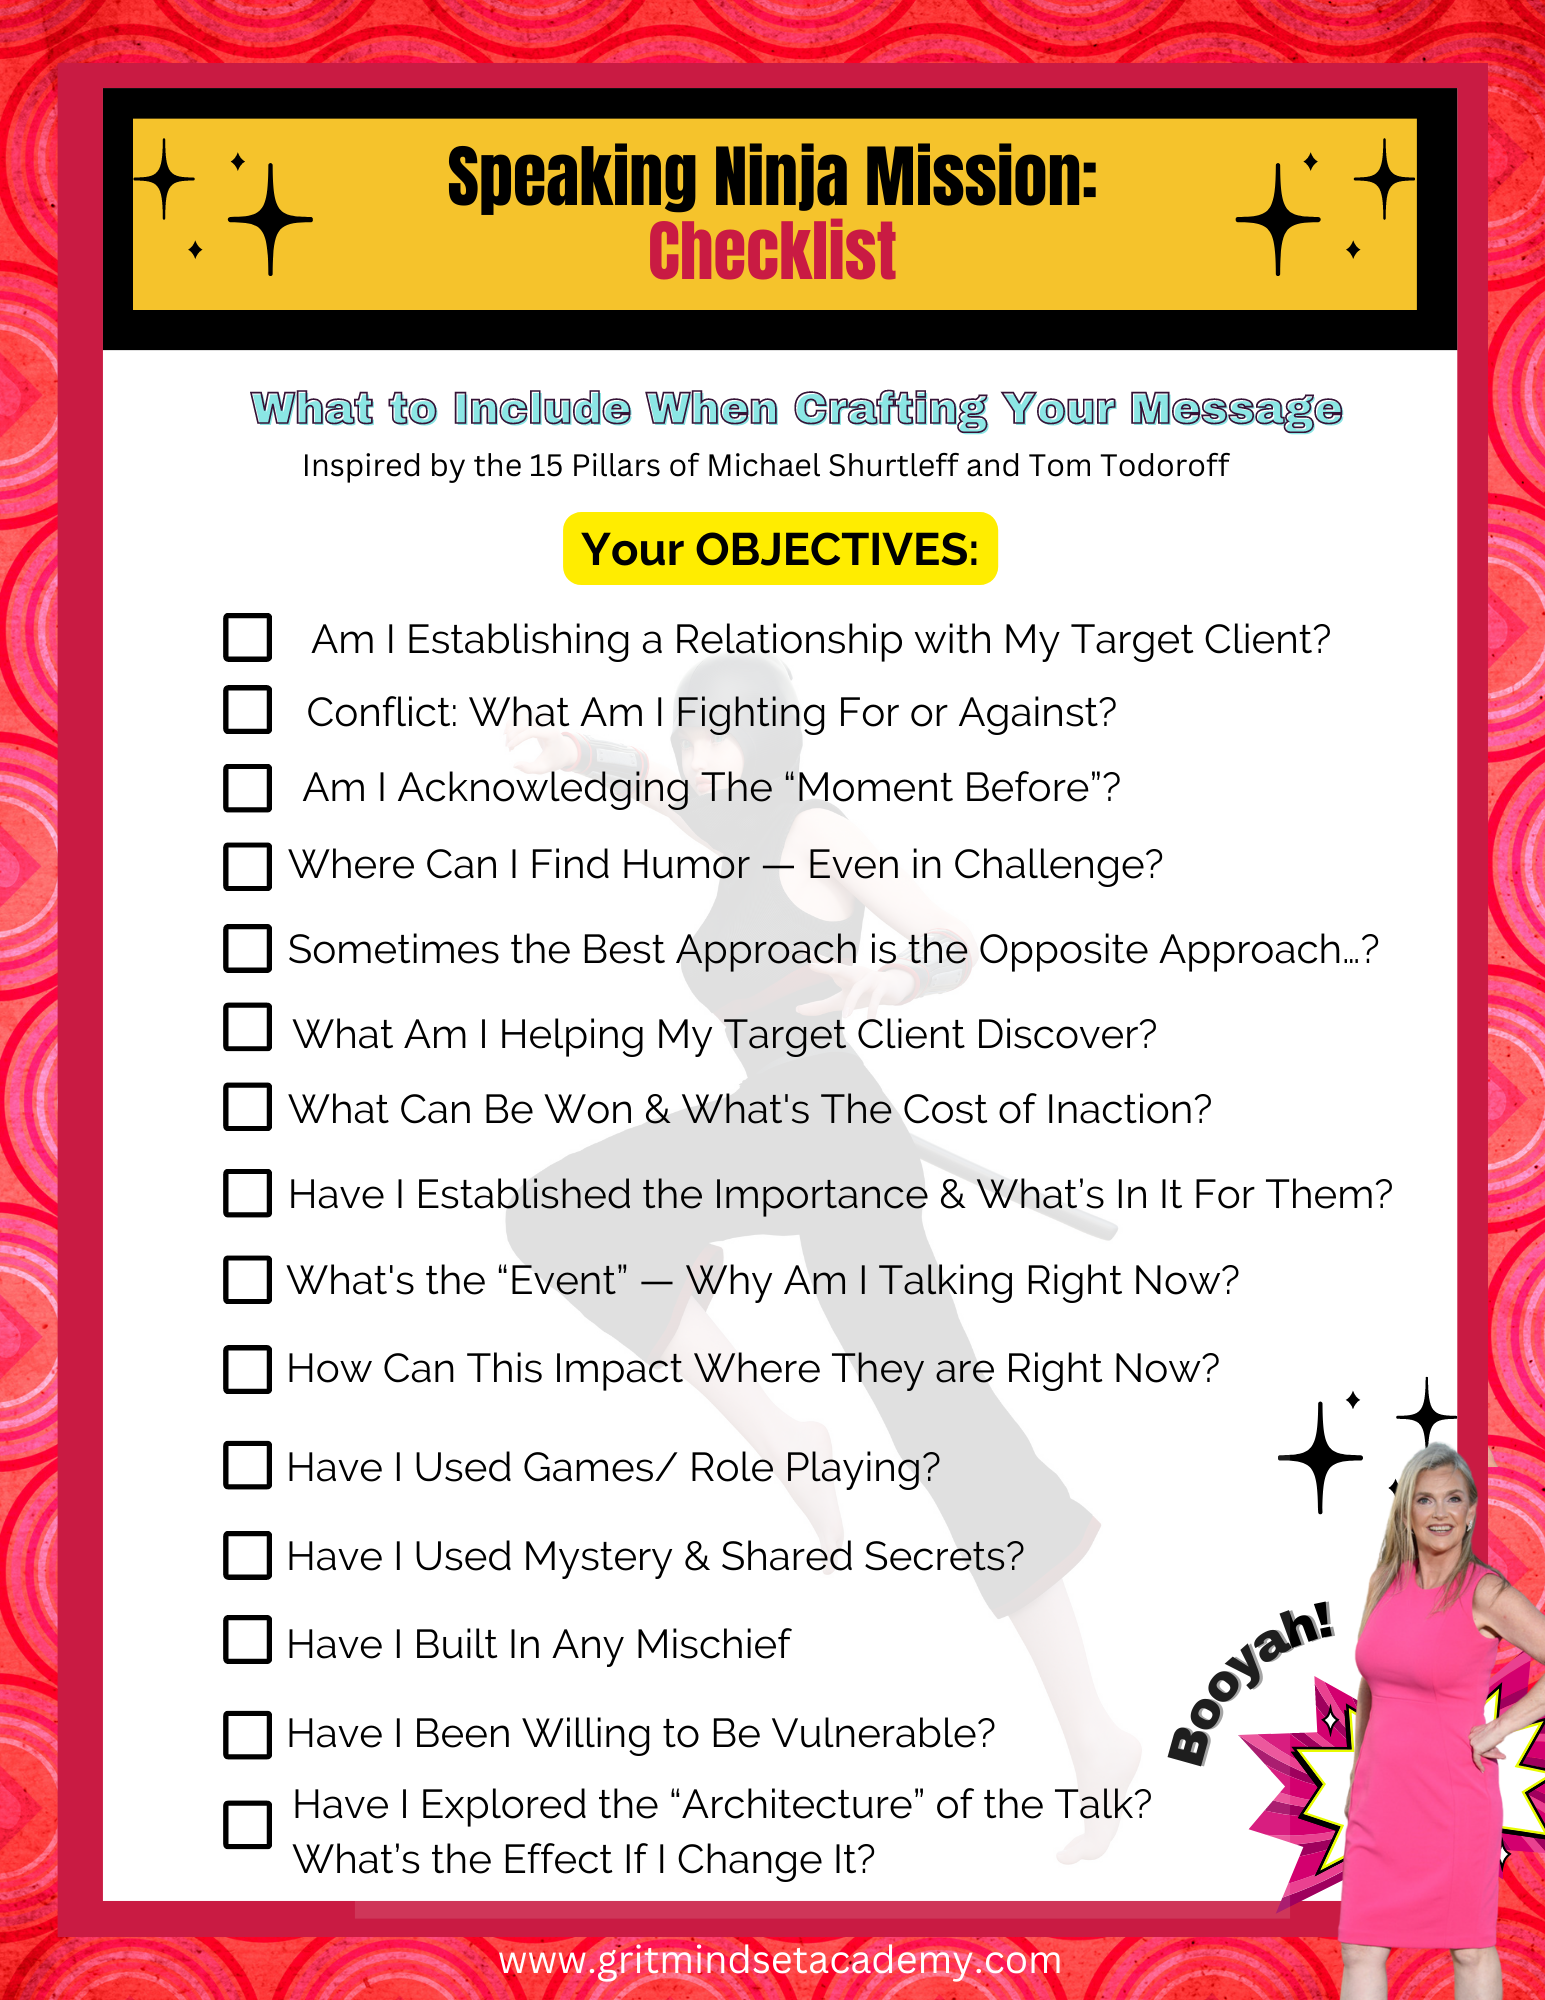 Speaking Ninja Content Creation checklist